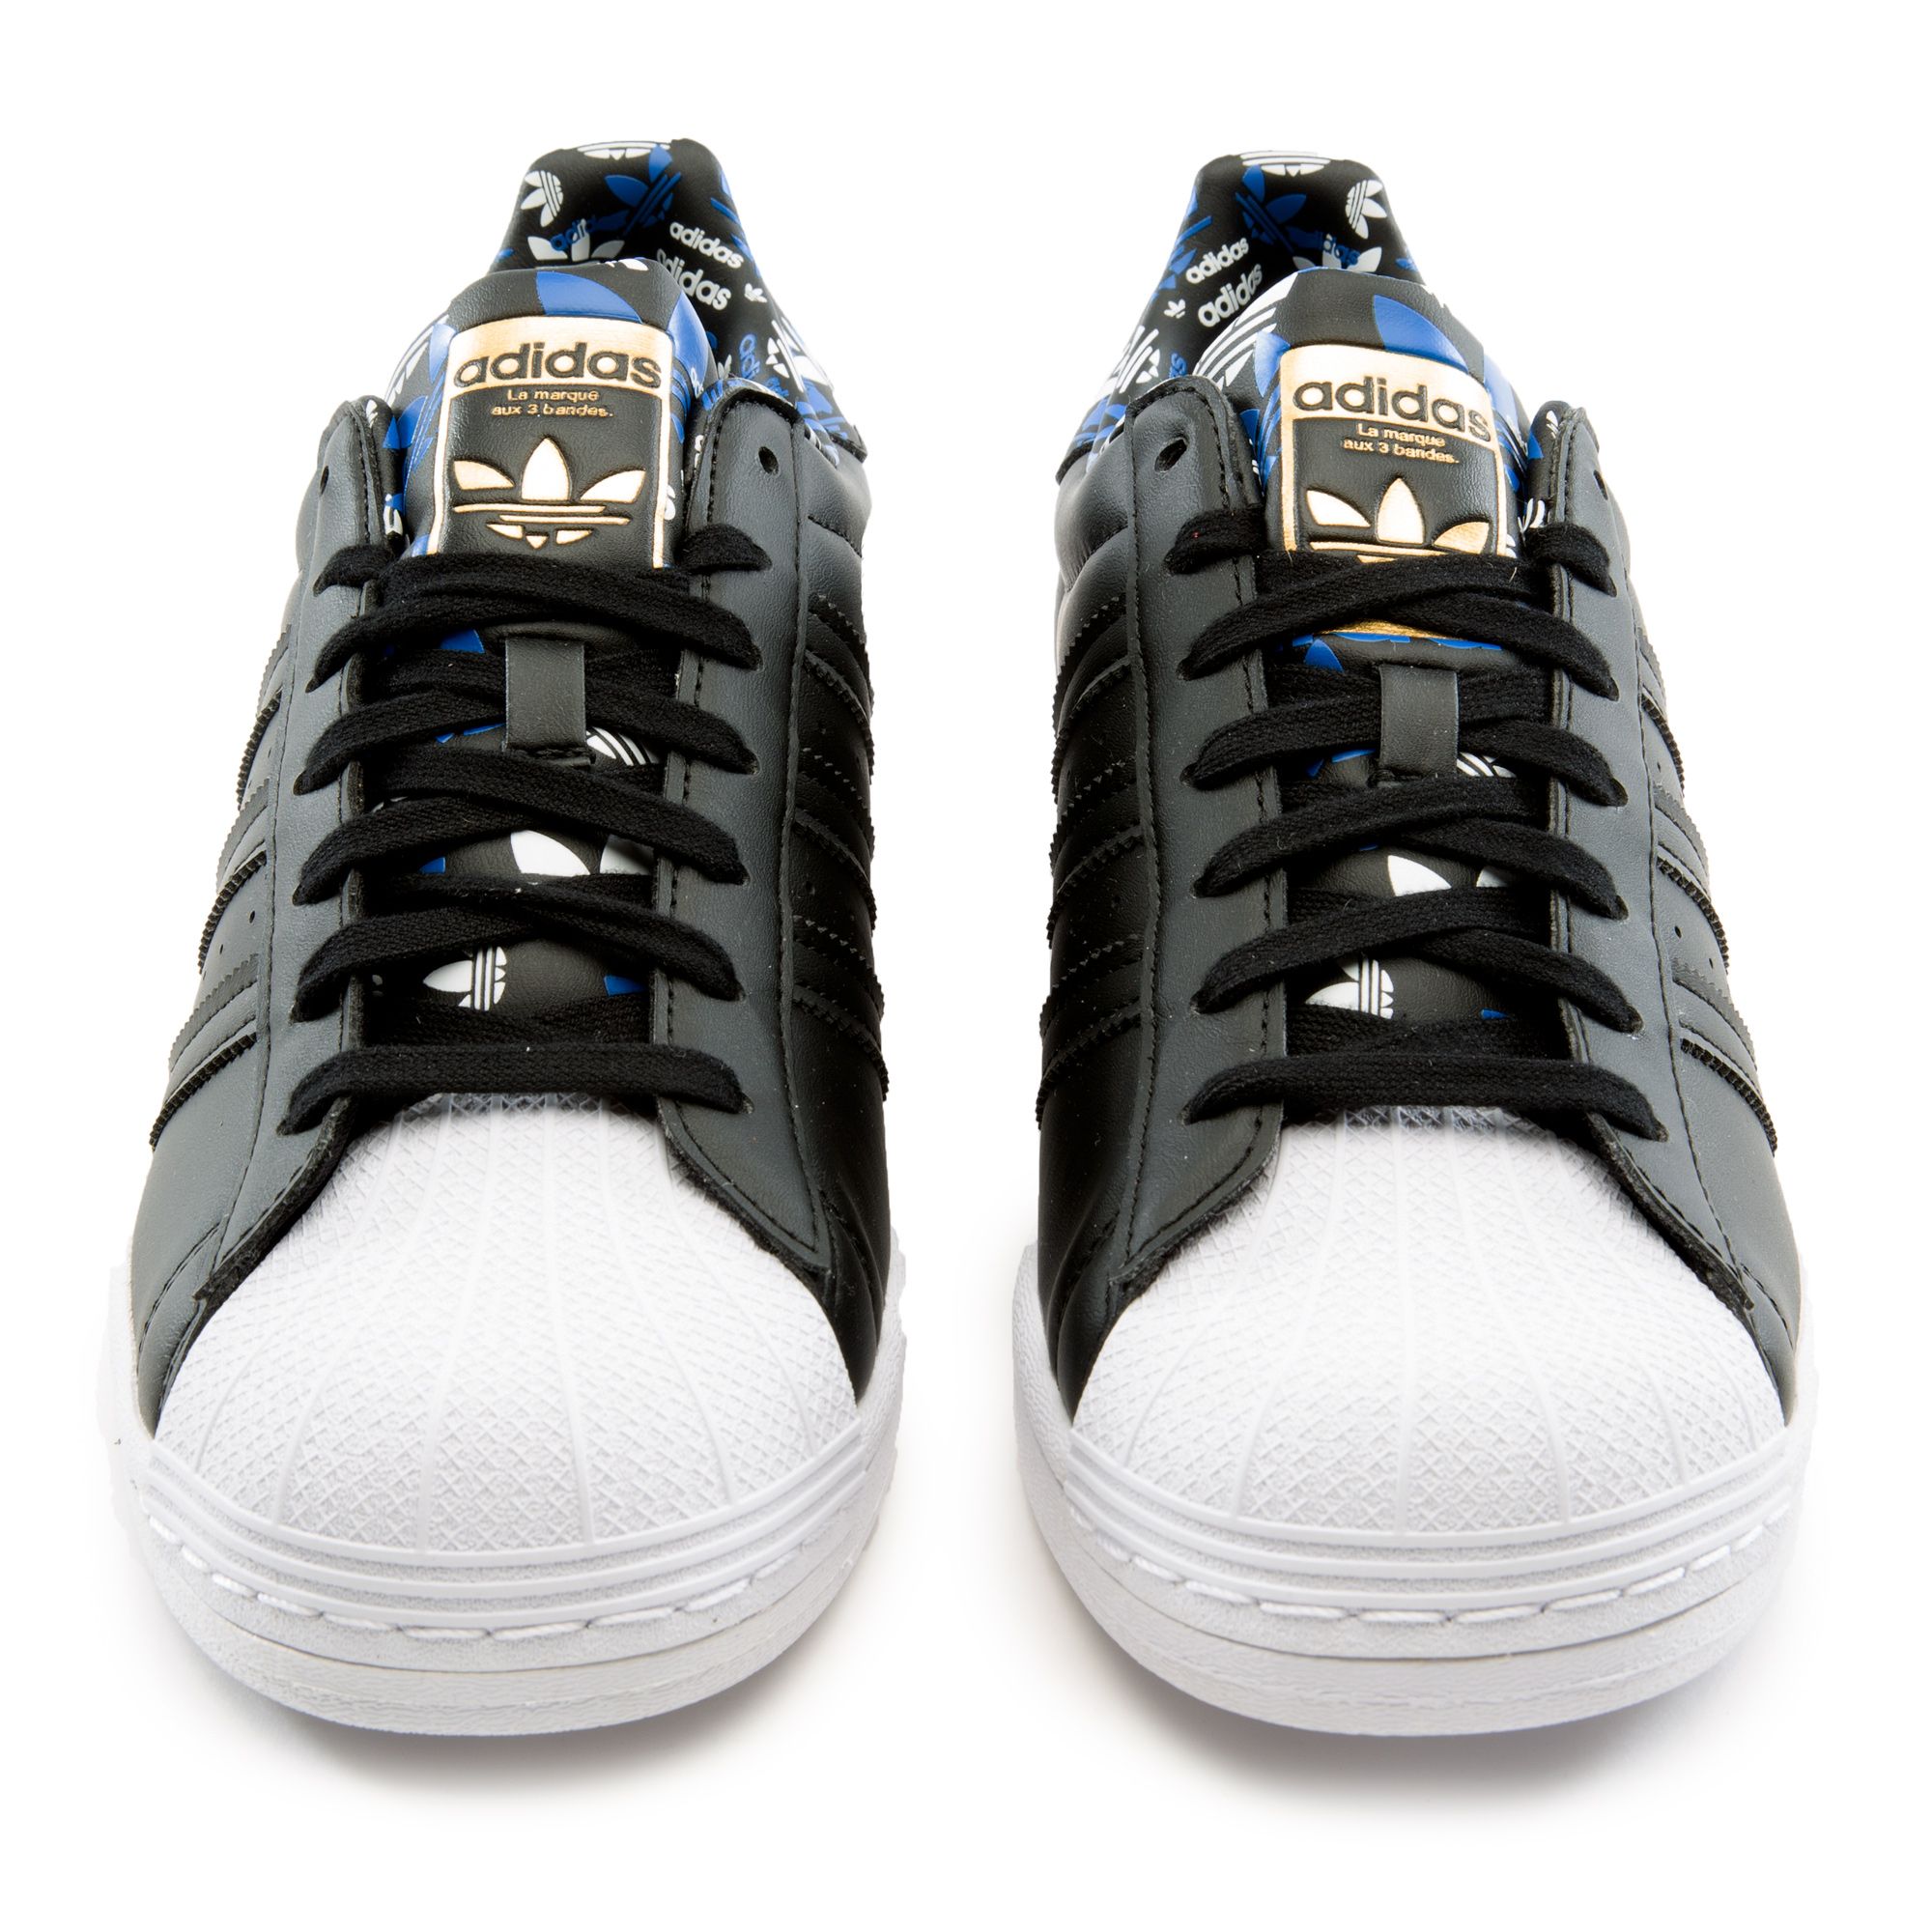 Adidas Originals Superstar Core Black Gold Blue 8.5